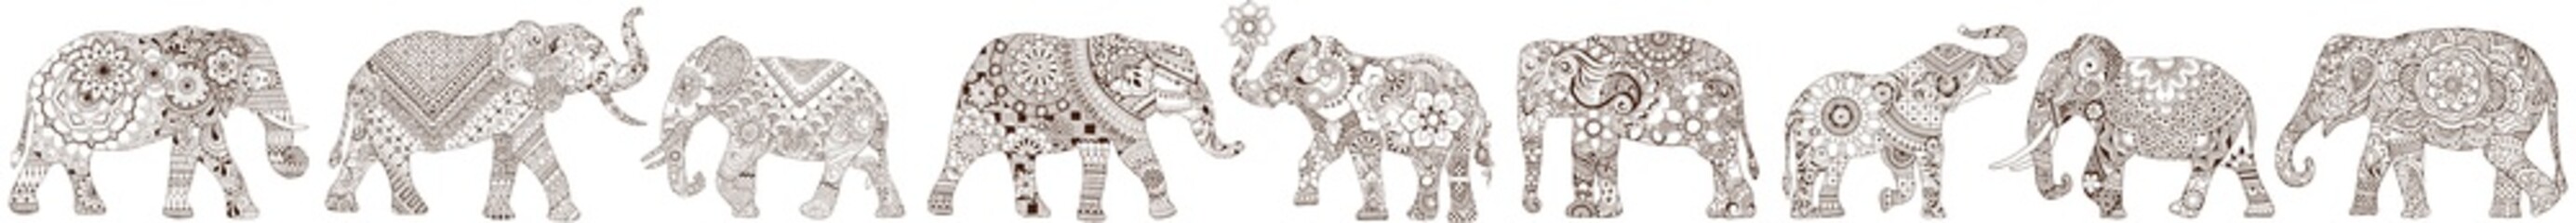 ПечатьA set of ornate elephants in mehndi style. - 424437989